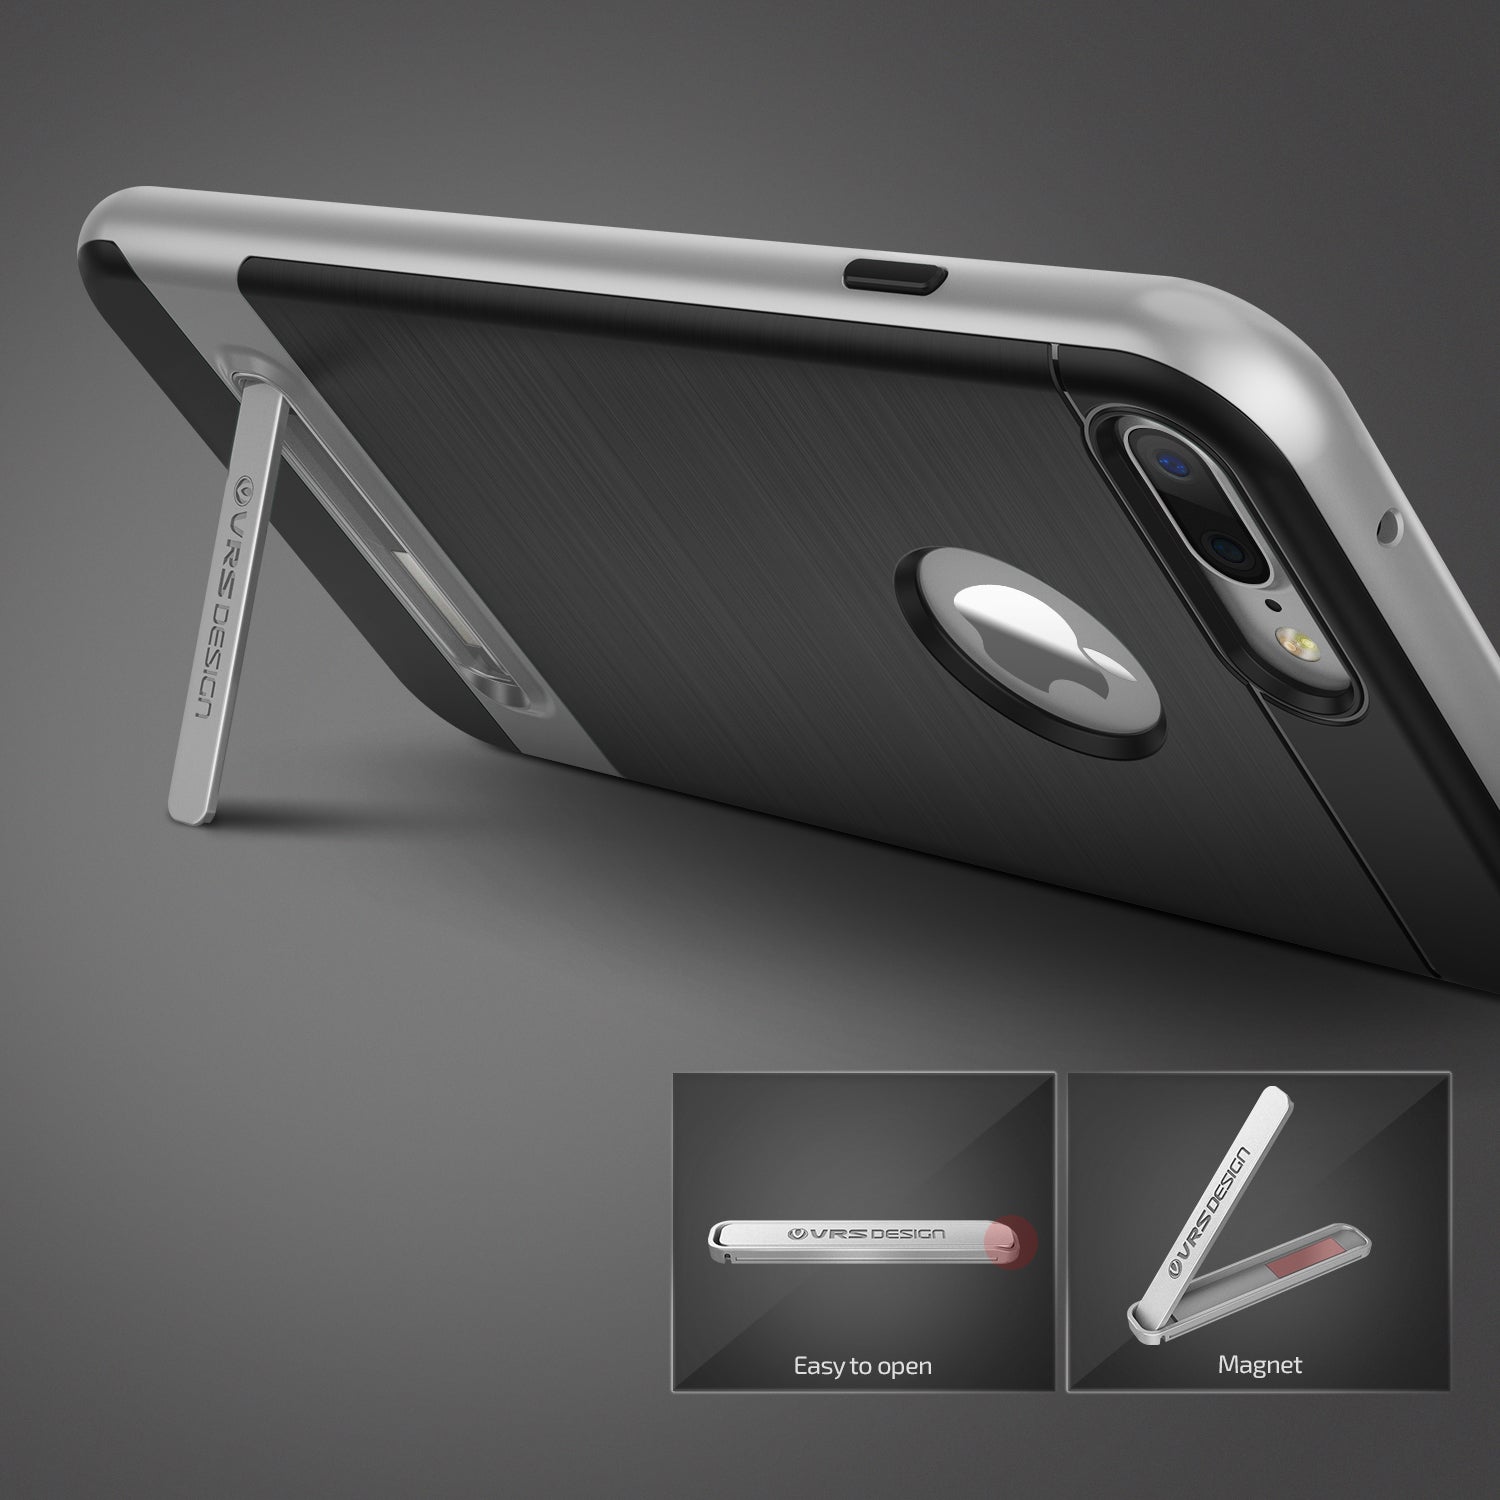 High Pro Shield Series Original From VRS Design Anti-shocks Case For iPhone 7 Plus Black / Silver